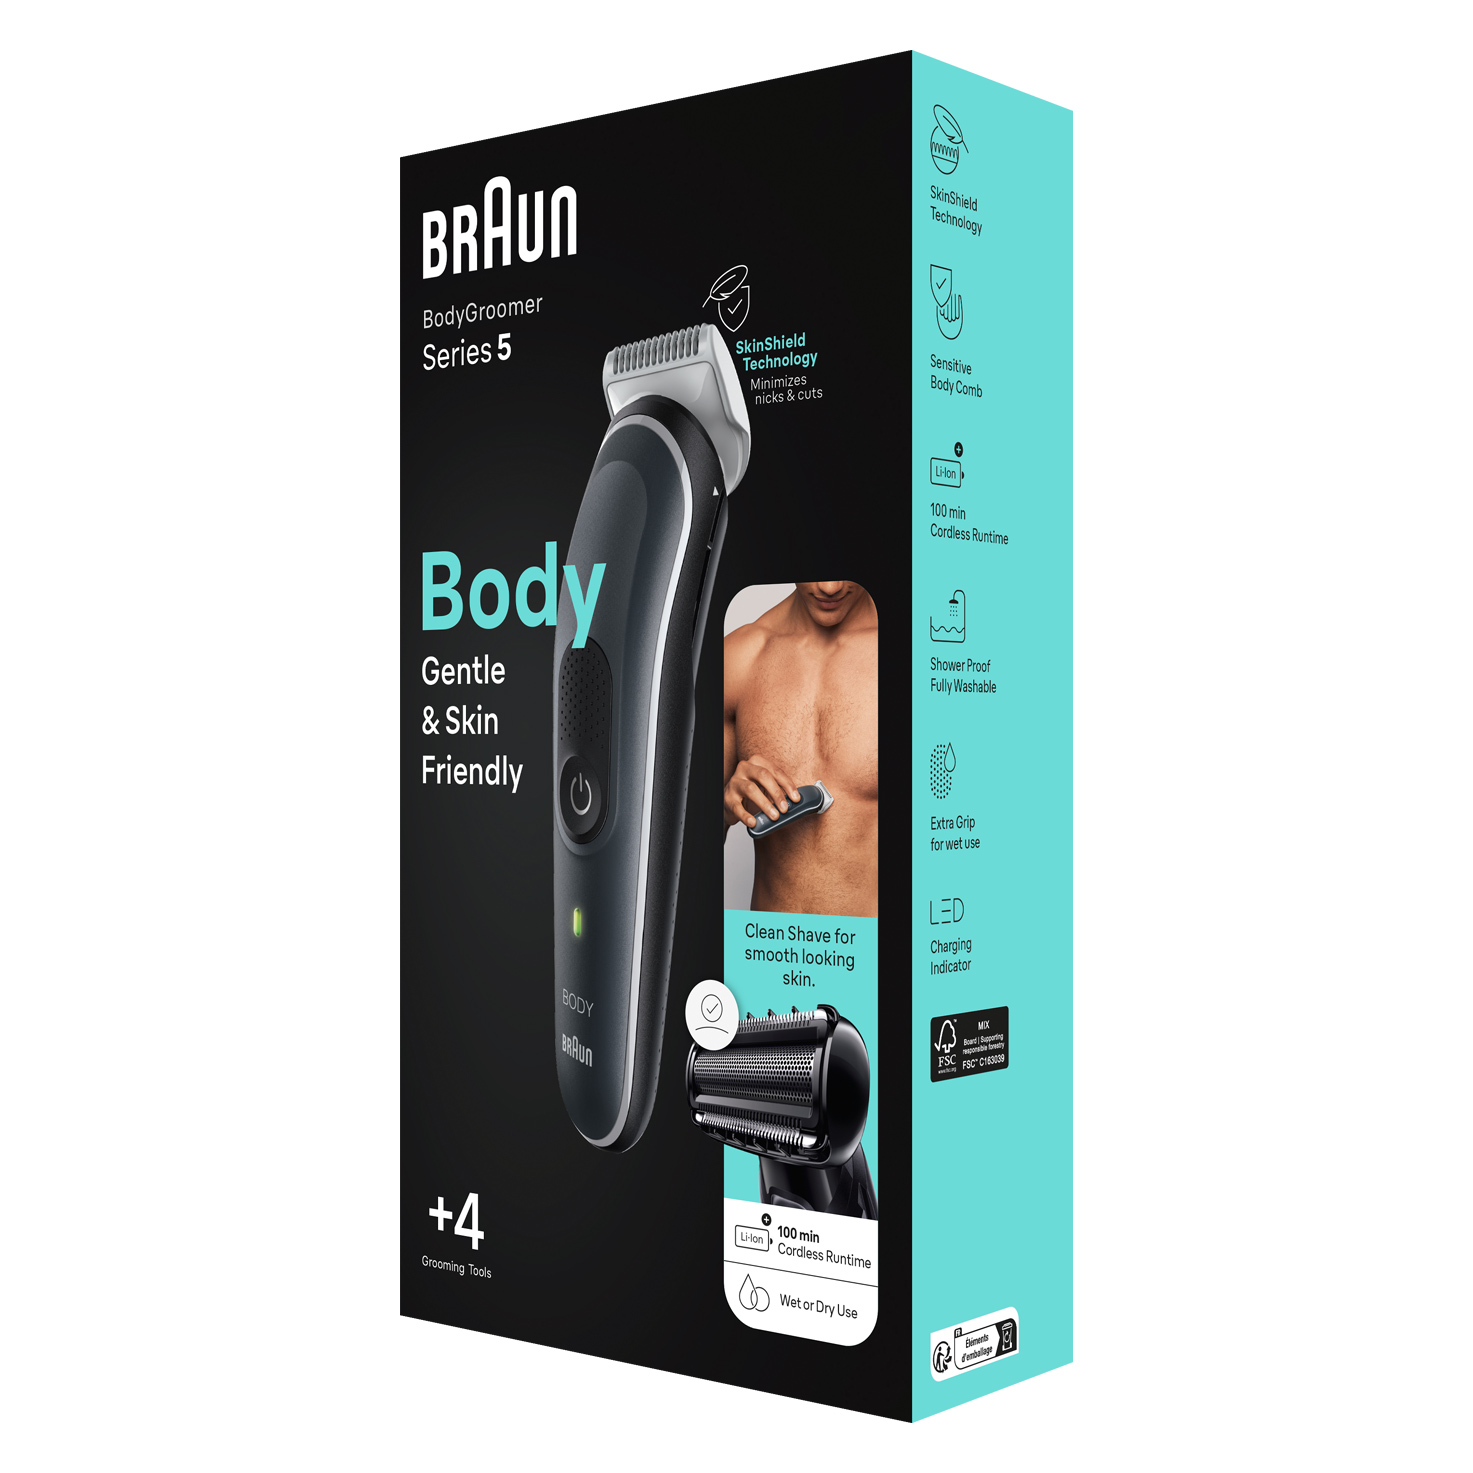 Braun BG5360 body groomer | Wet & dry body grooming | Braun SG